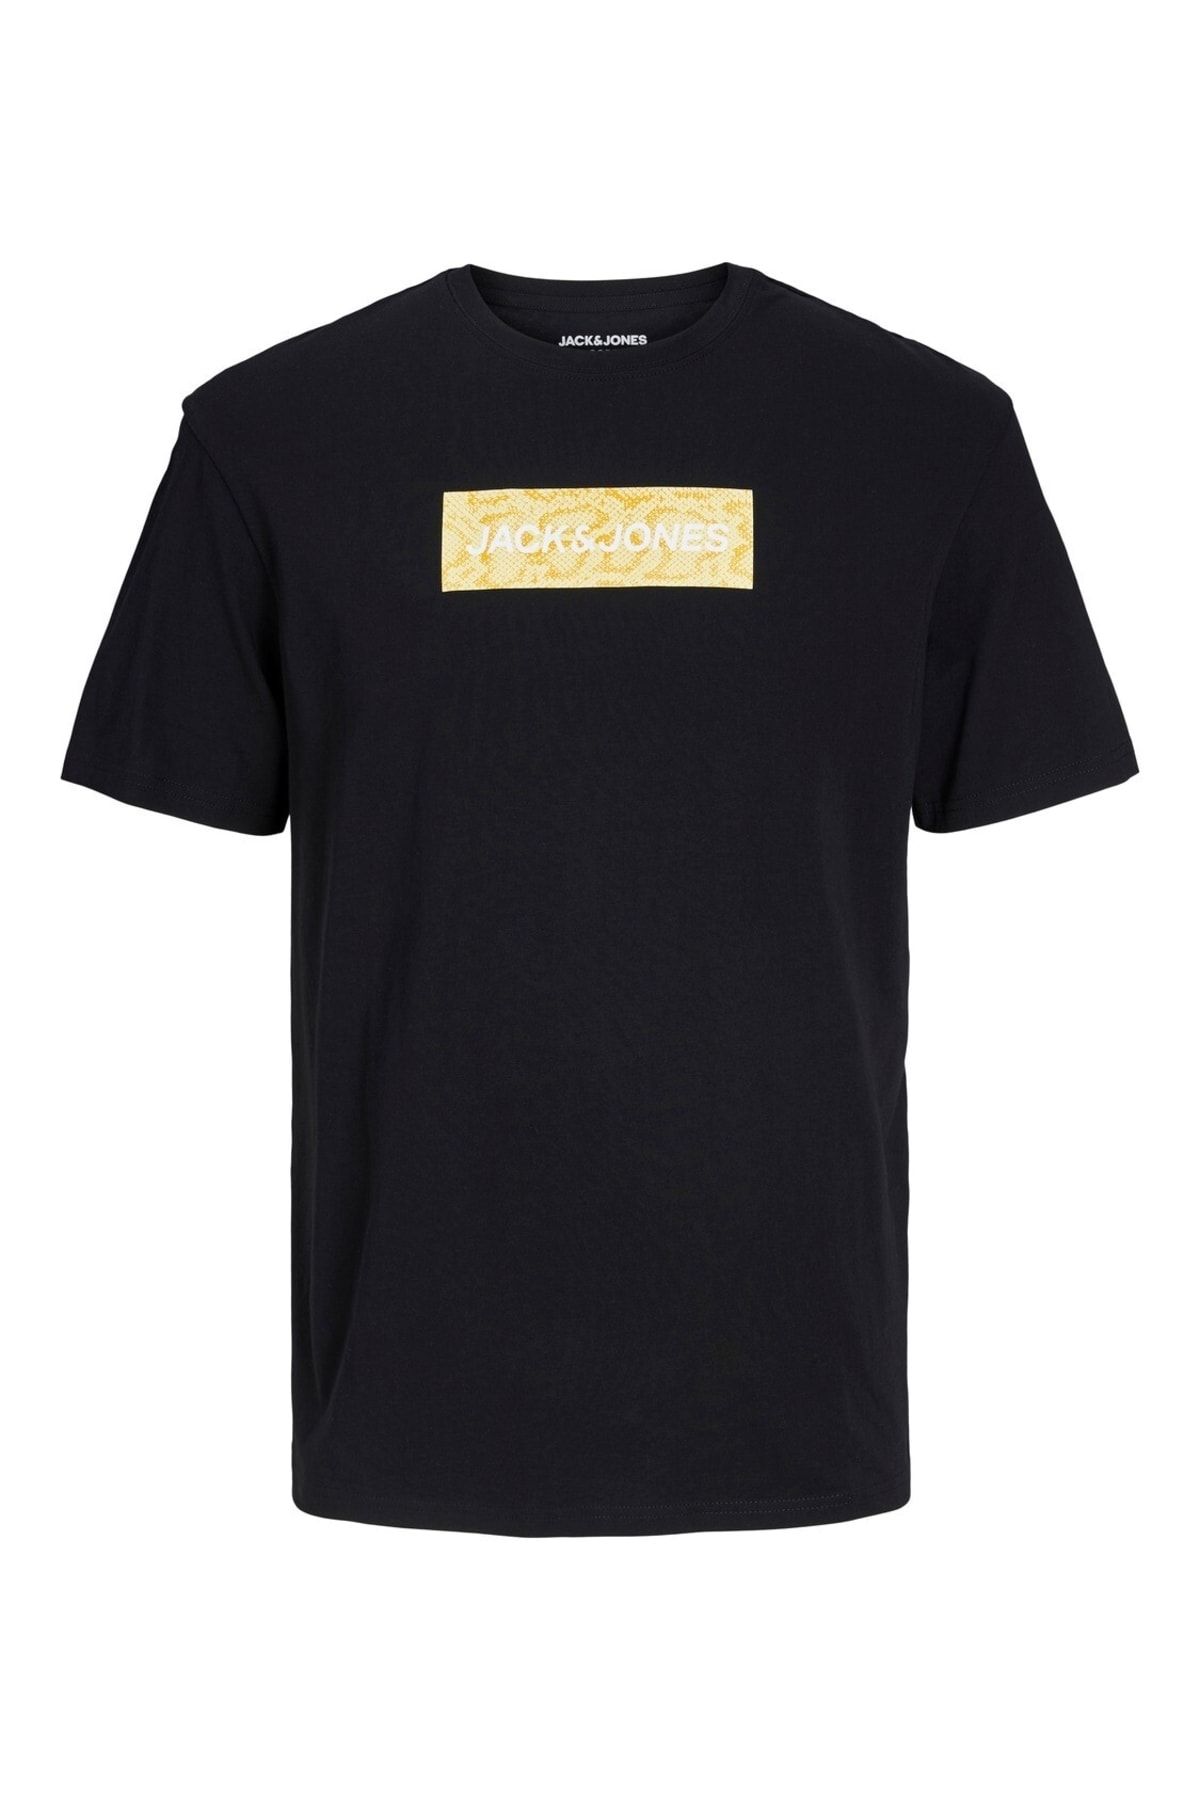 Jack & Jones تی شرت مردانه آستین کوتاه مشکی با چاپ یقه جک و جونز 12229758